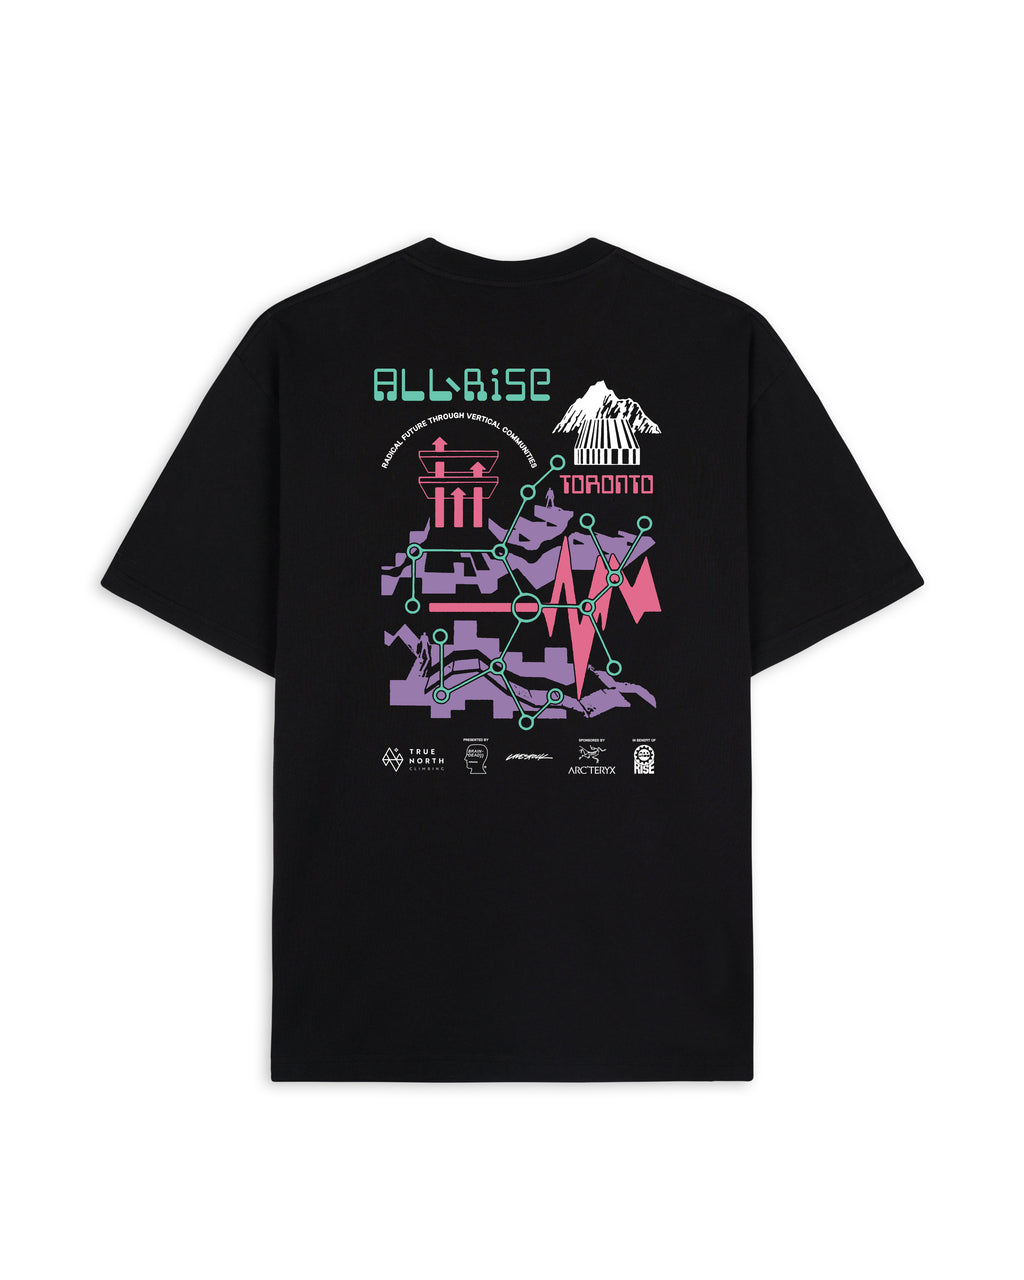 All Rise Toronto T-shirt - Black 2